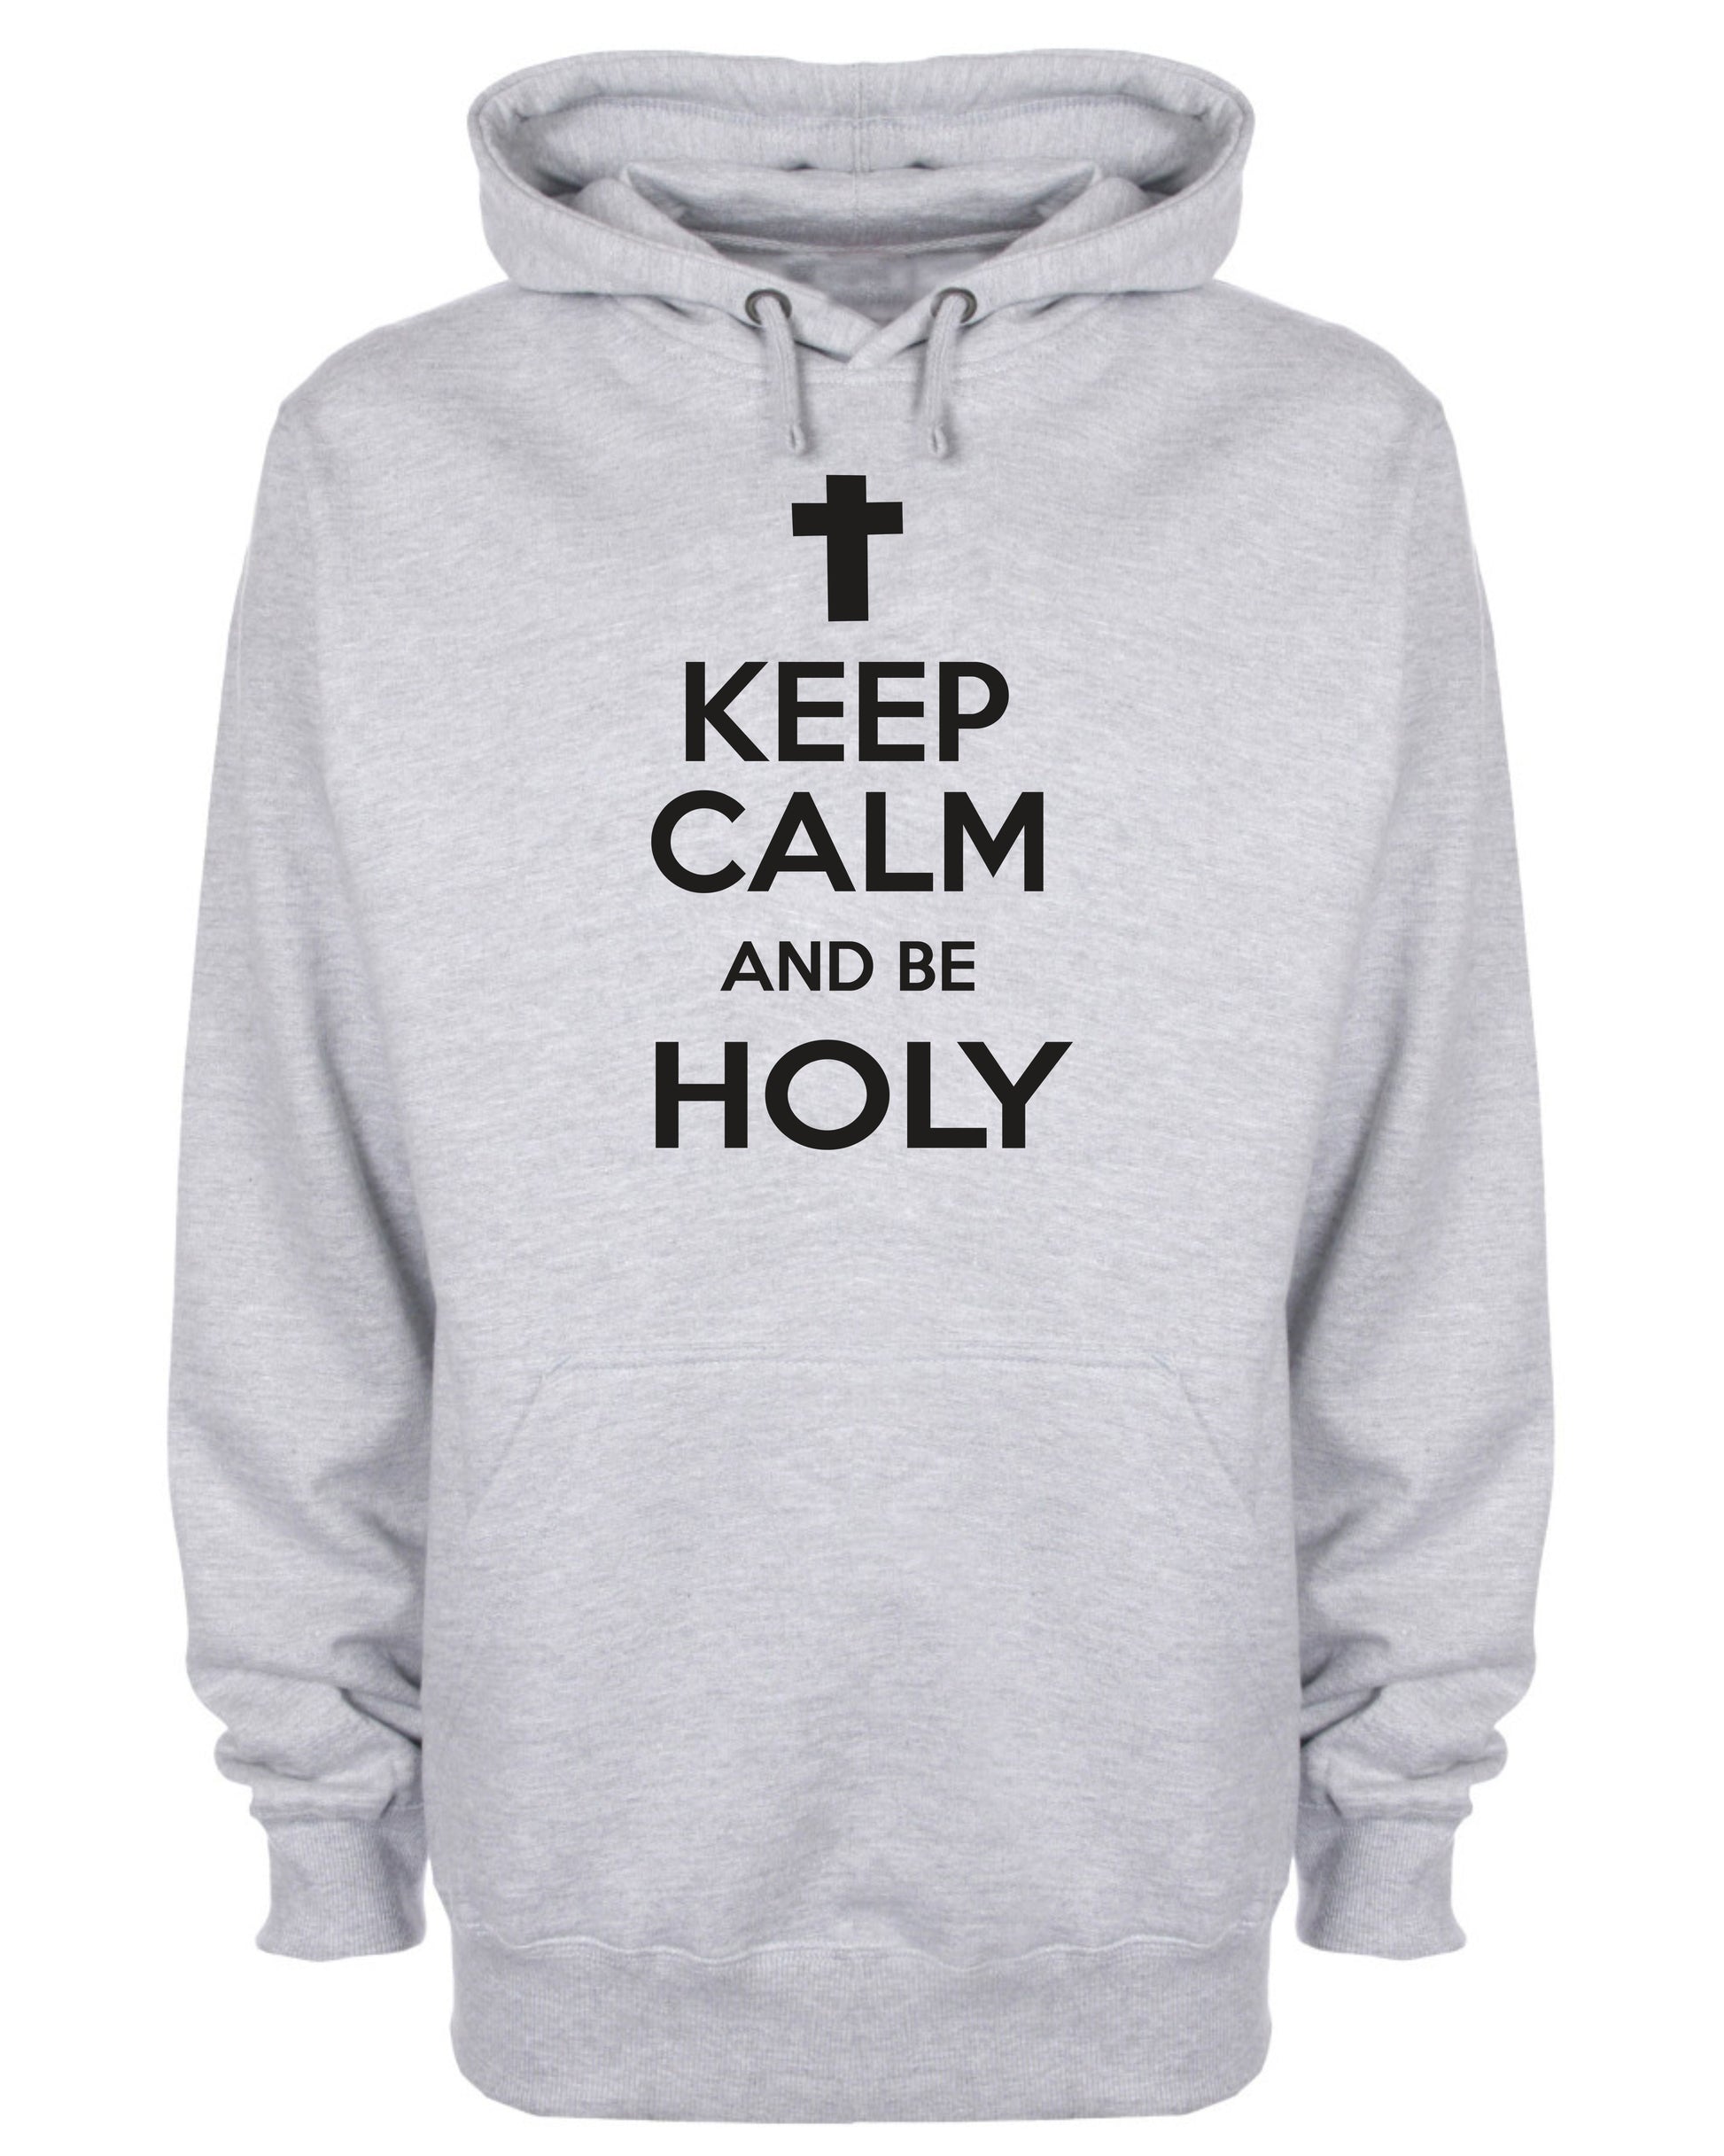 Keep Calm And Be Holy Hoodie Christian Sweatshirt